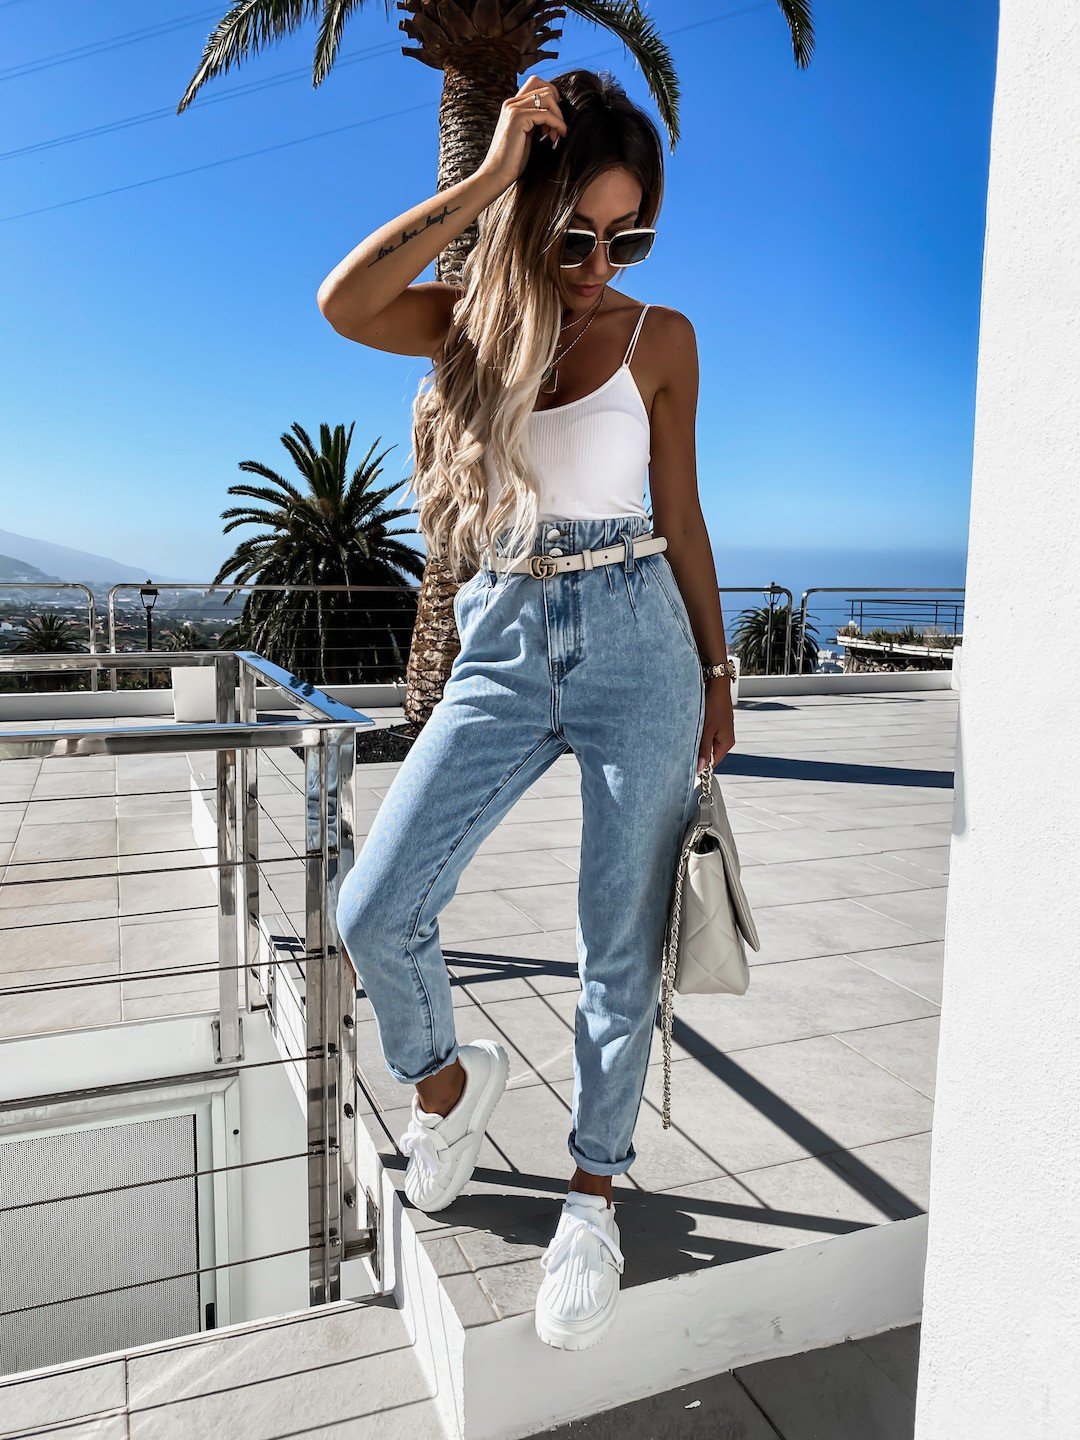 Calça Mom Plus Size Letícia Strass Jeans - Program Moda